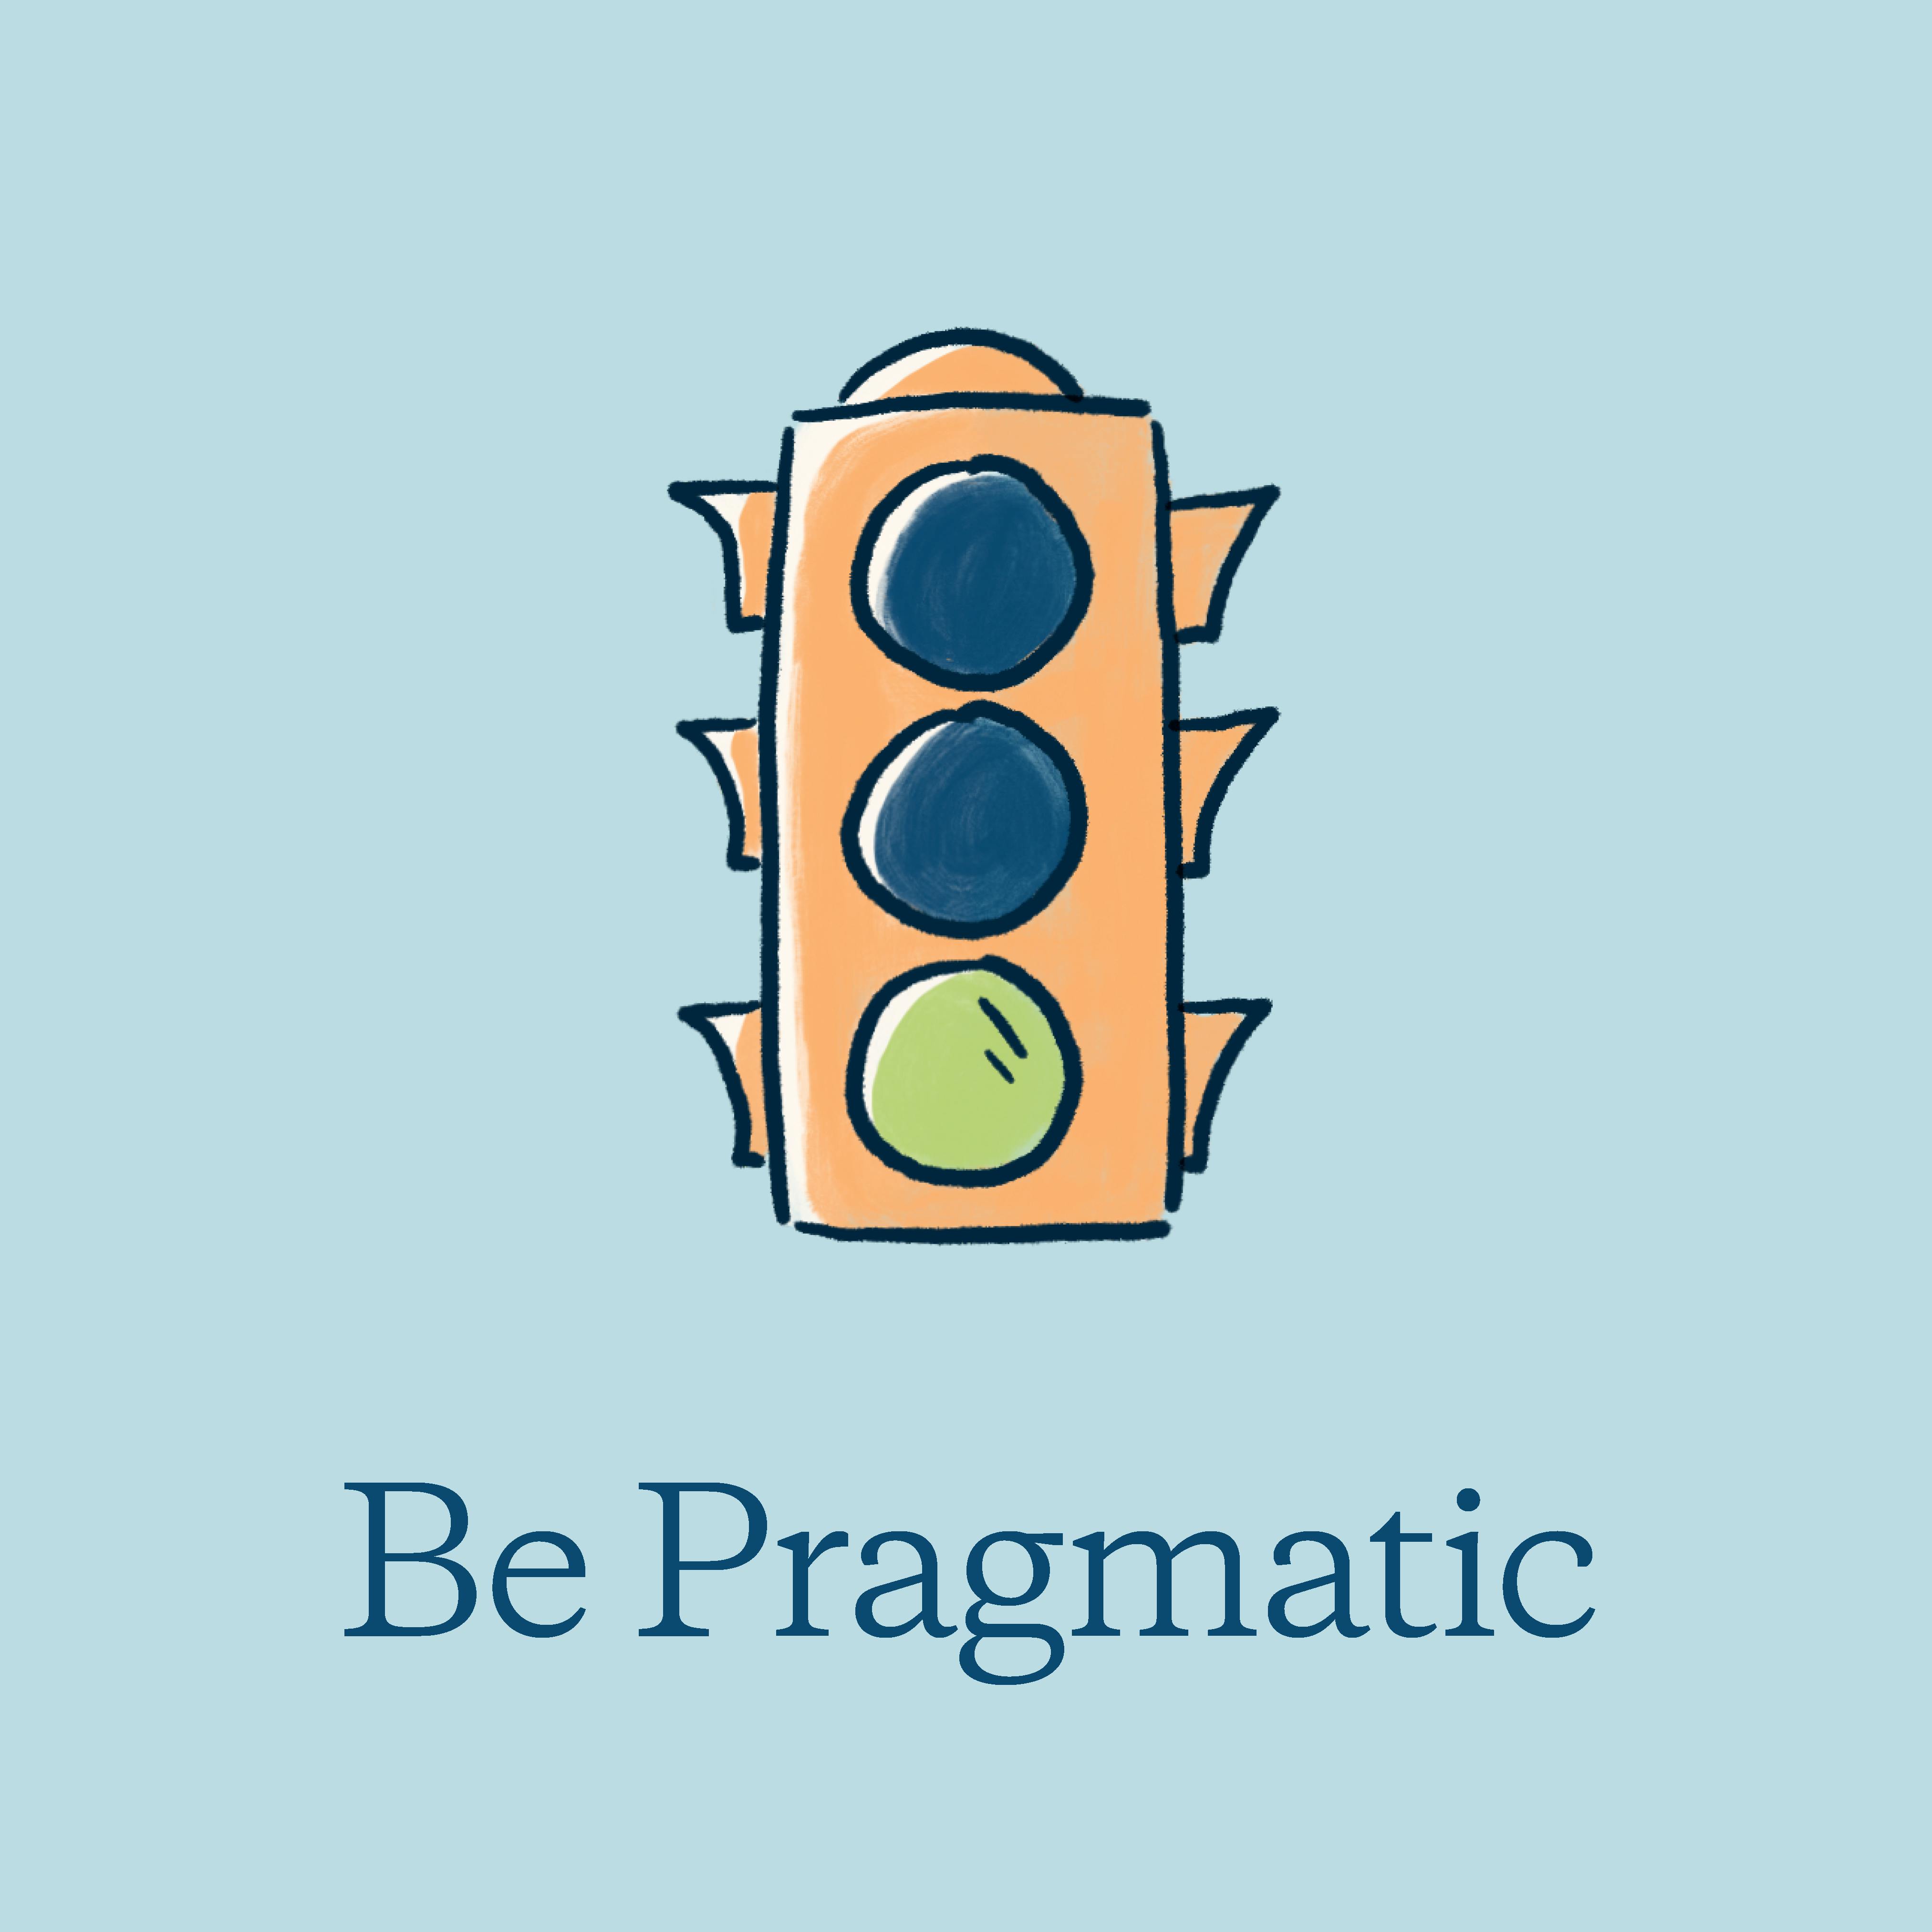 BE PRAGMATIC AND GO